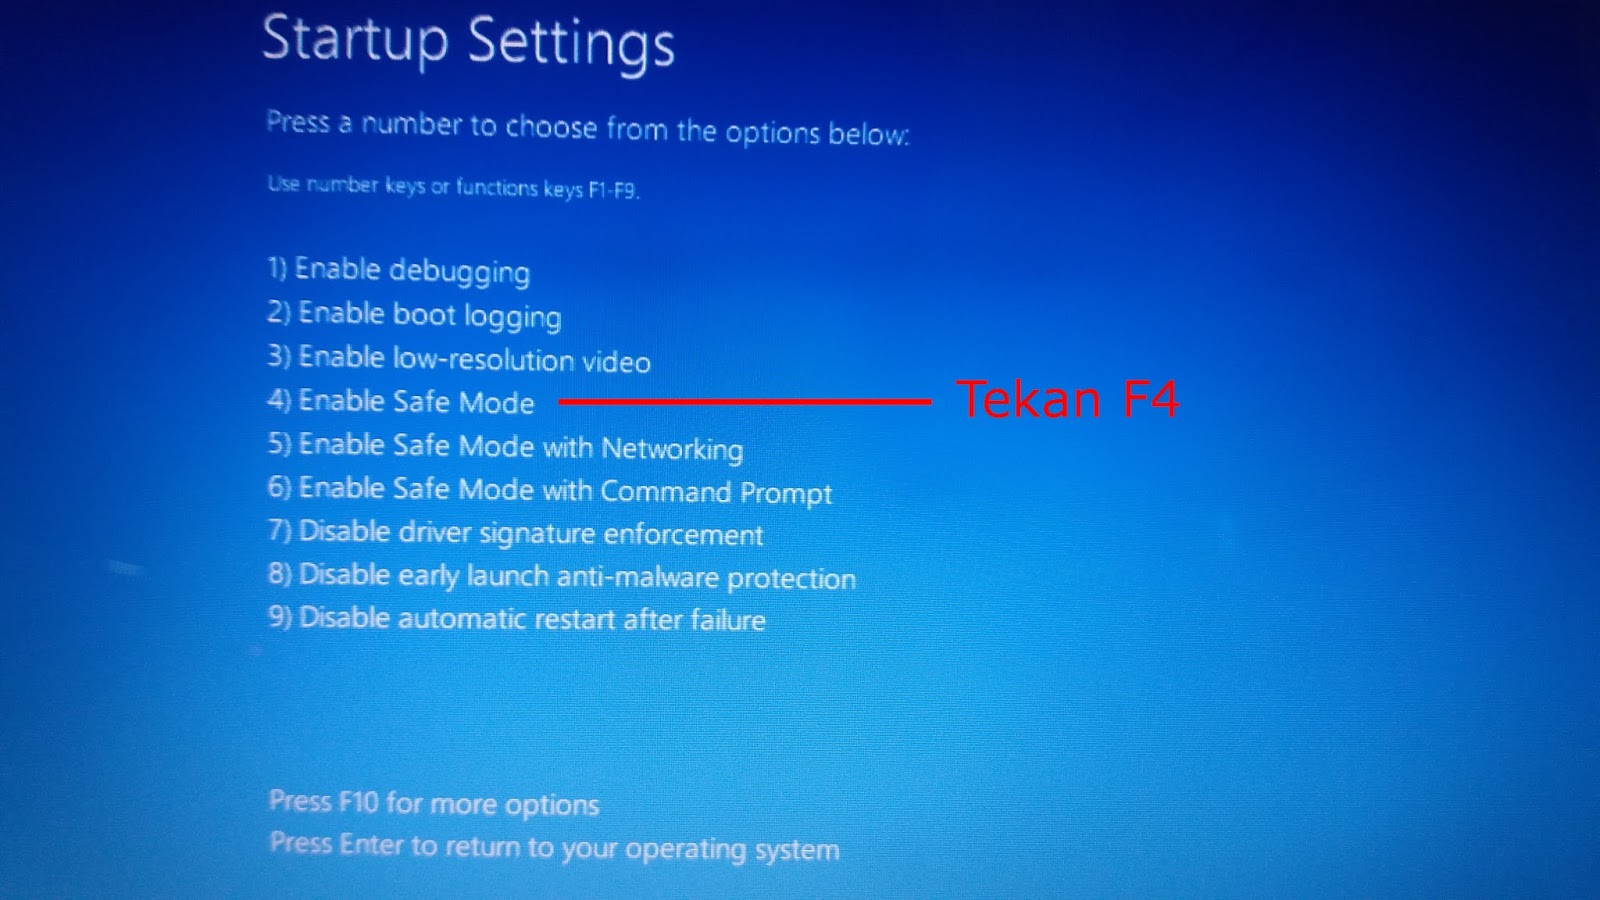 Press options. Startup settings. Startup settings Windows 10. Startup settings Windows 10 перевод. Safe Mode перевод.